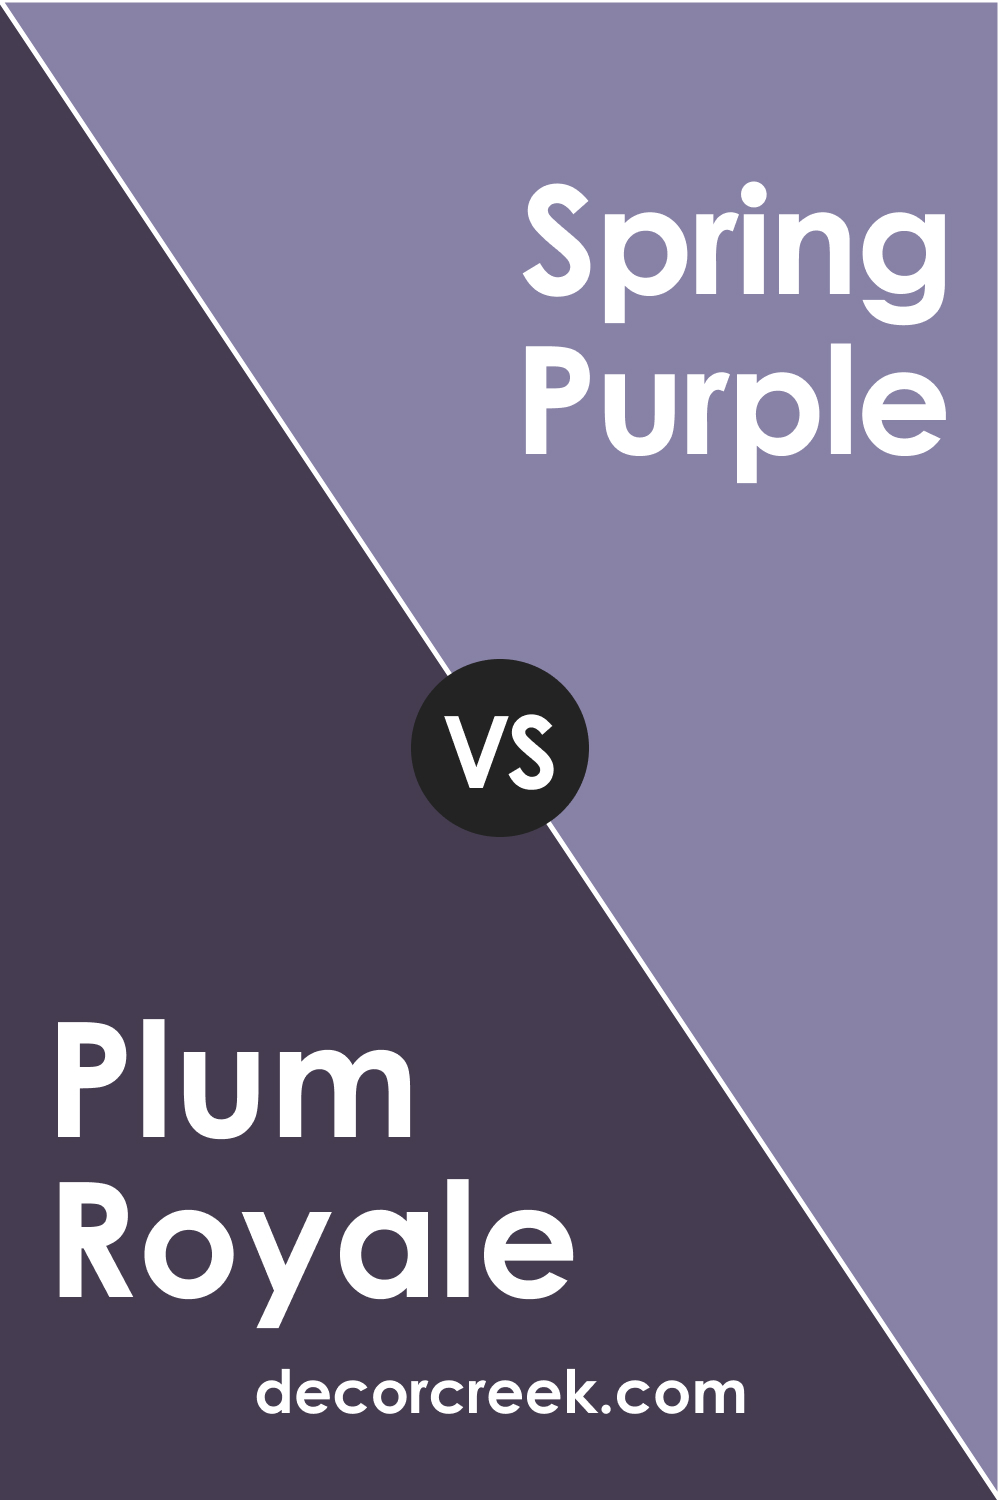 Plum Royale 2070-20 vs. BM 2070-40 Spring Purple